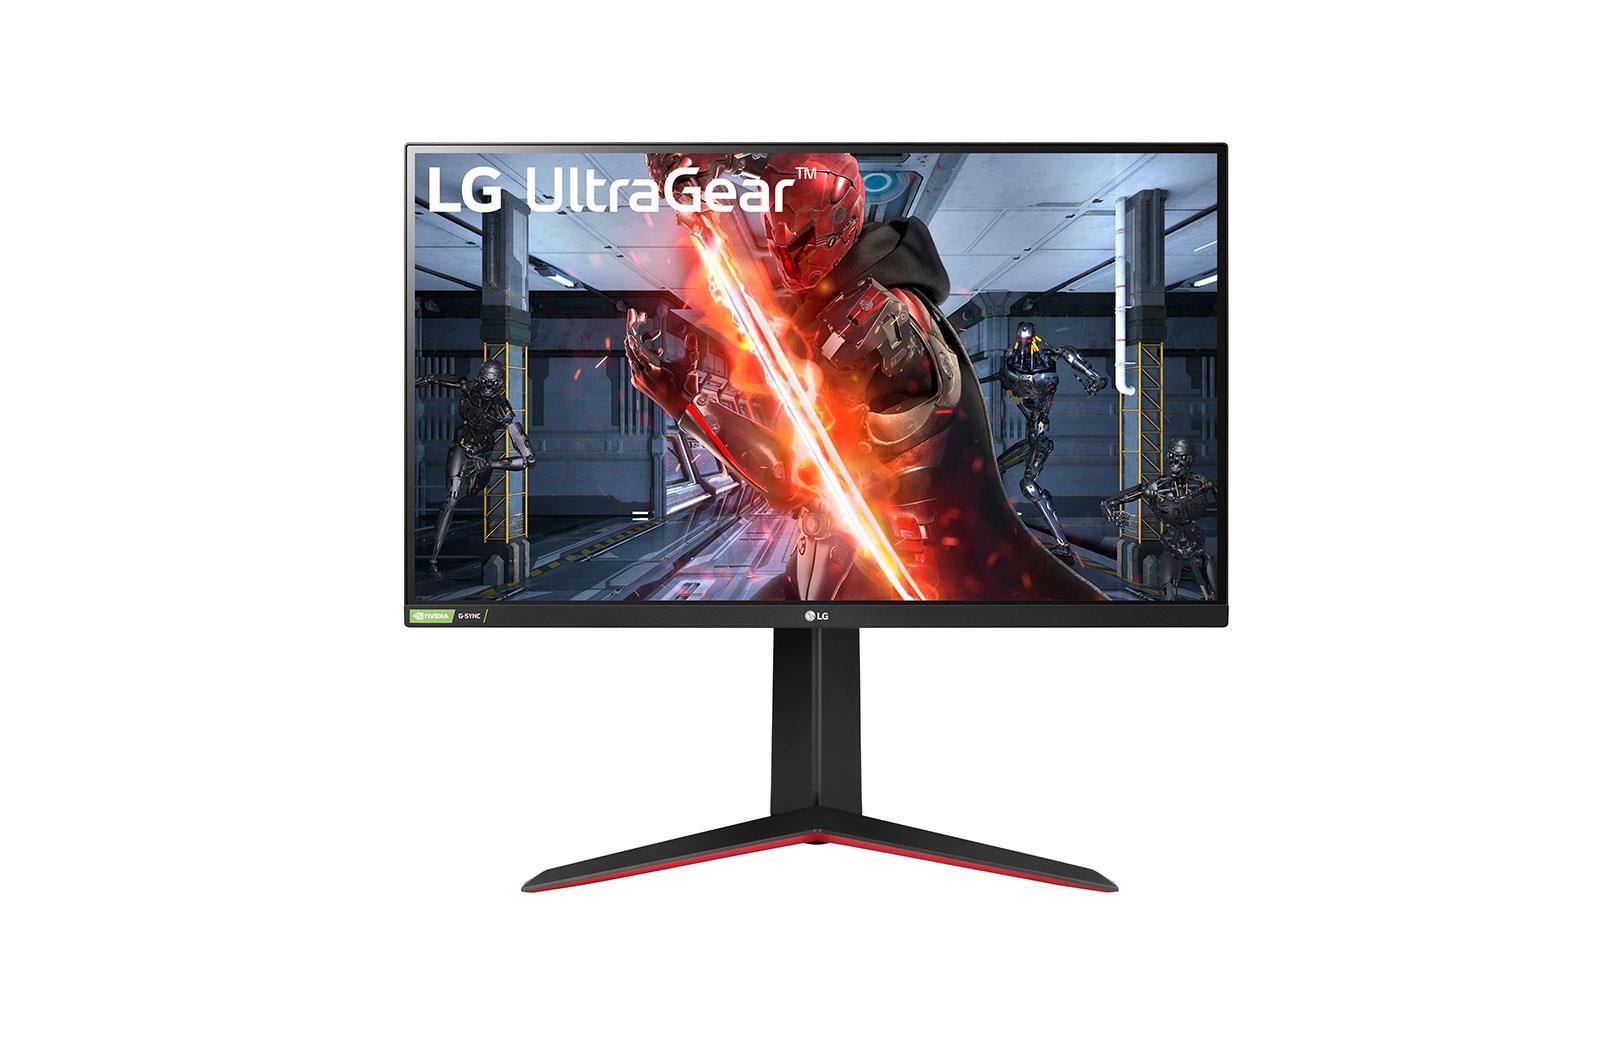 LG 27GN850 UltraGear Gaming